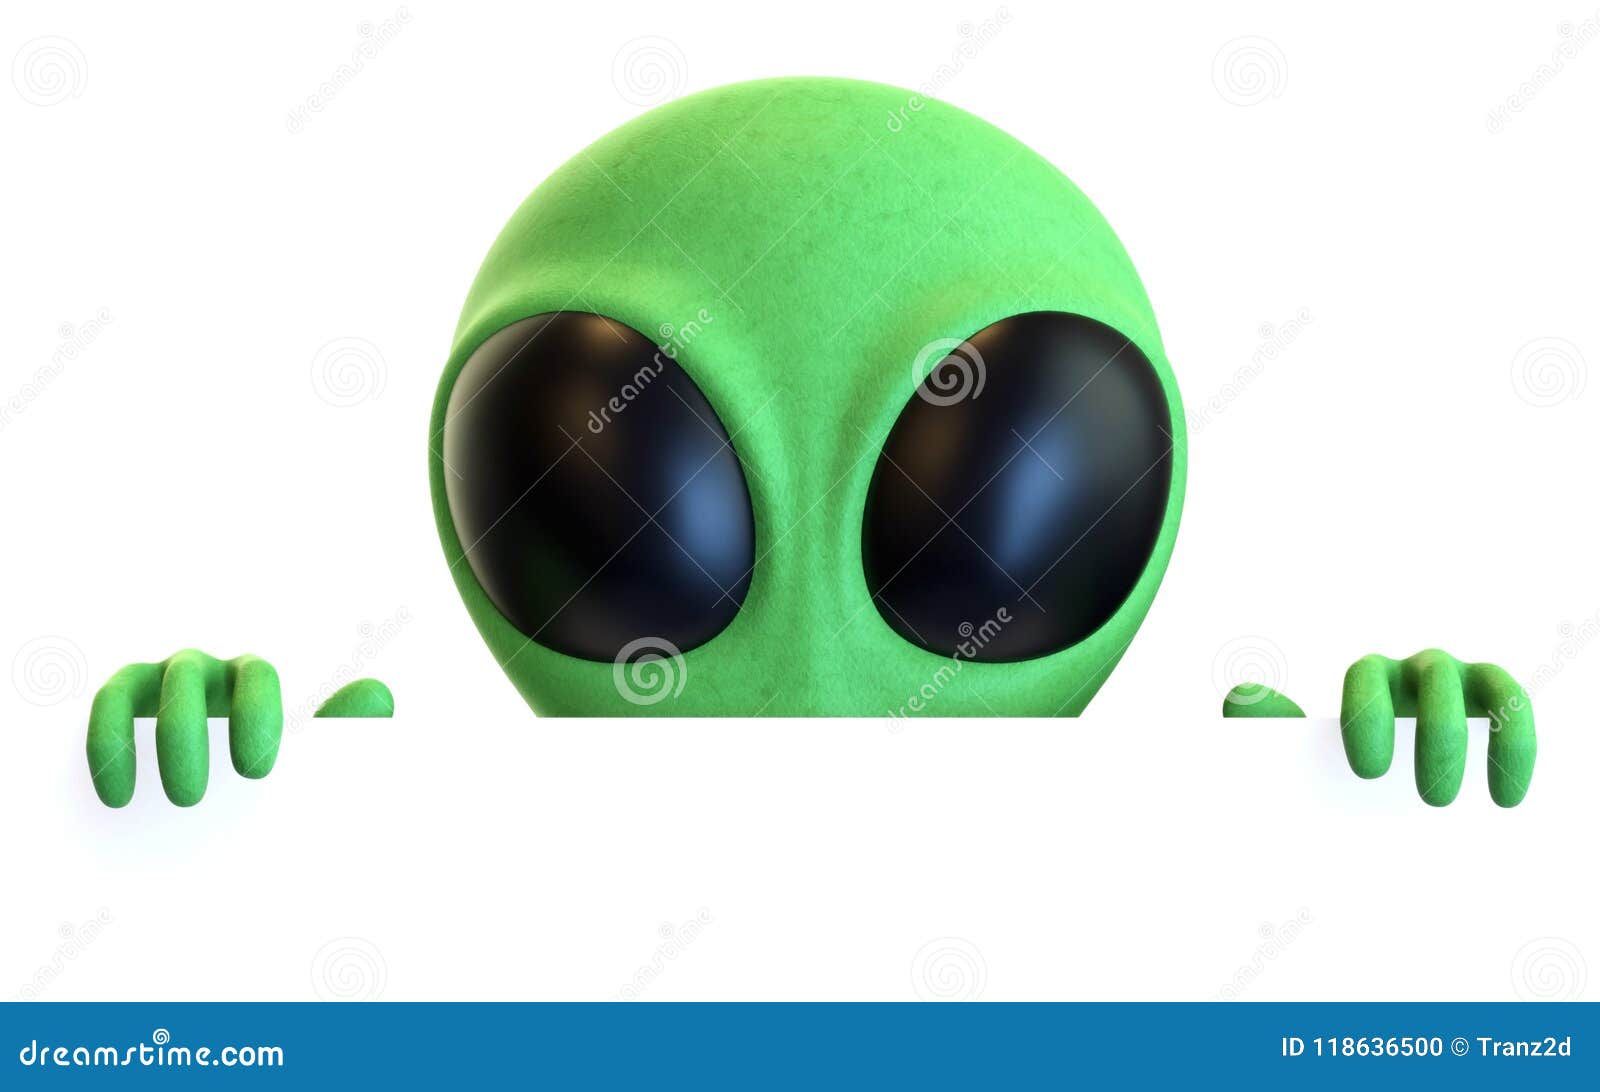 green cartoon alien peeking over a blank sign